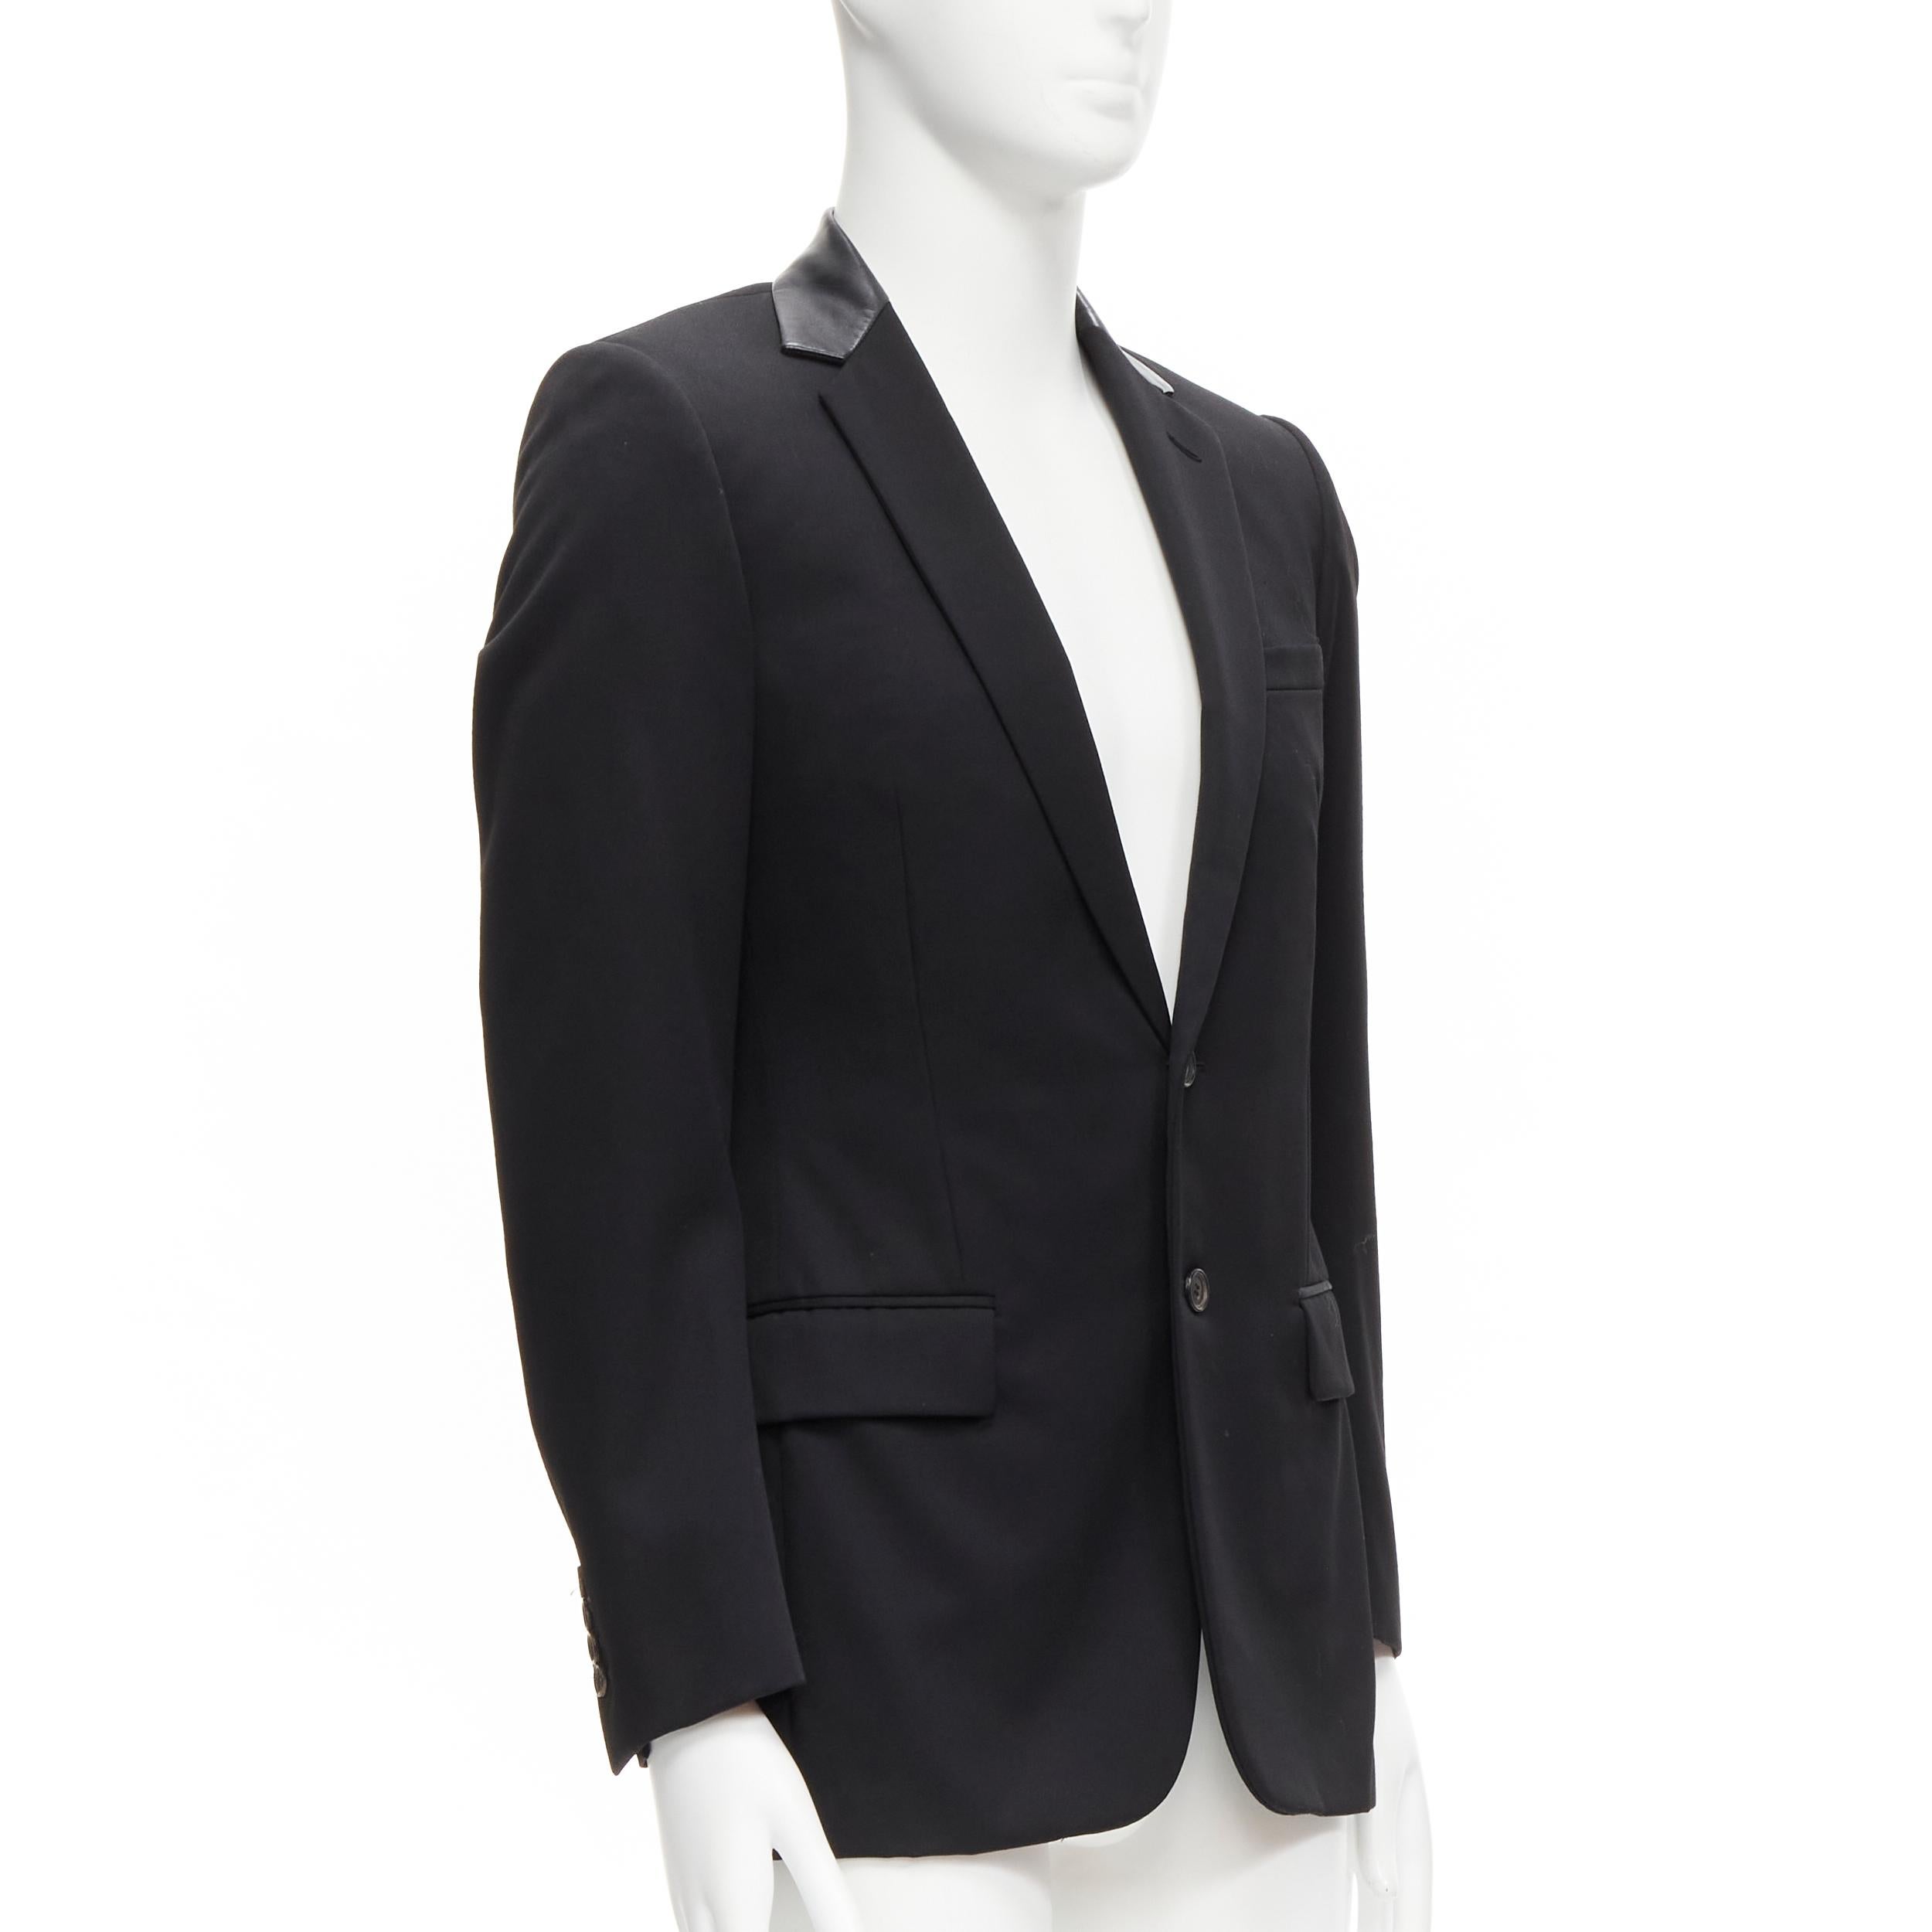 Men's DIOR HOMME Hedi Slimane leather collar classic 2-button blazer jacket FR46 S